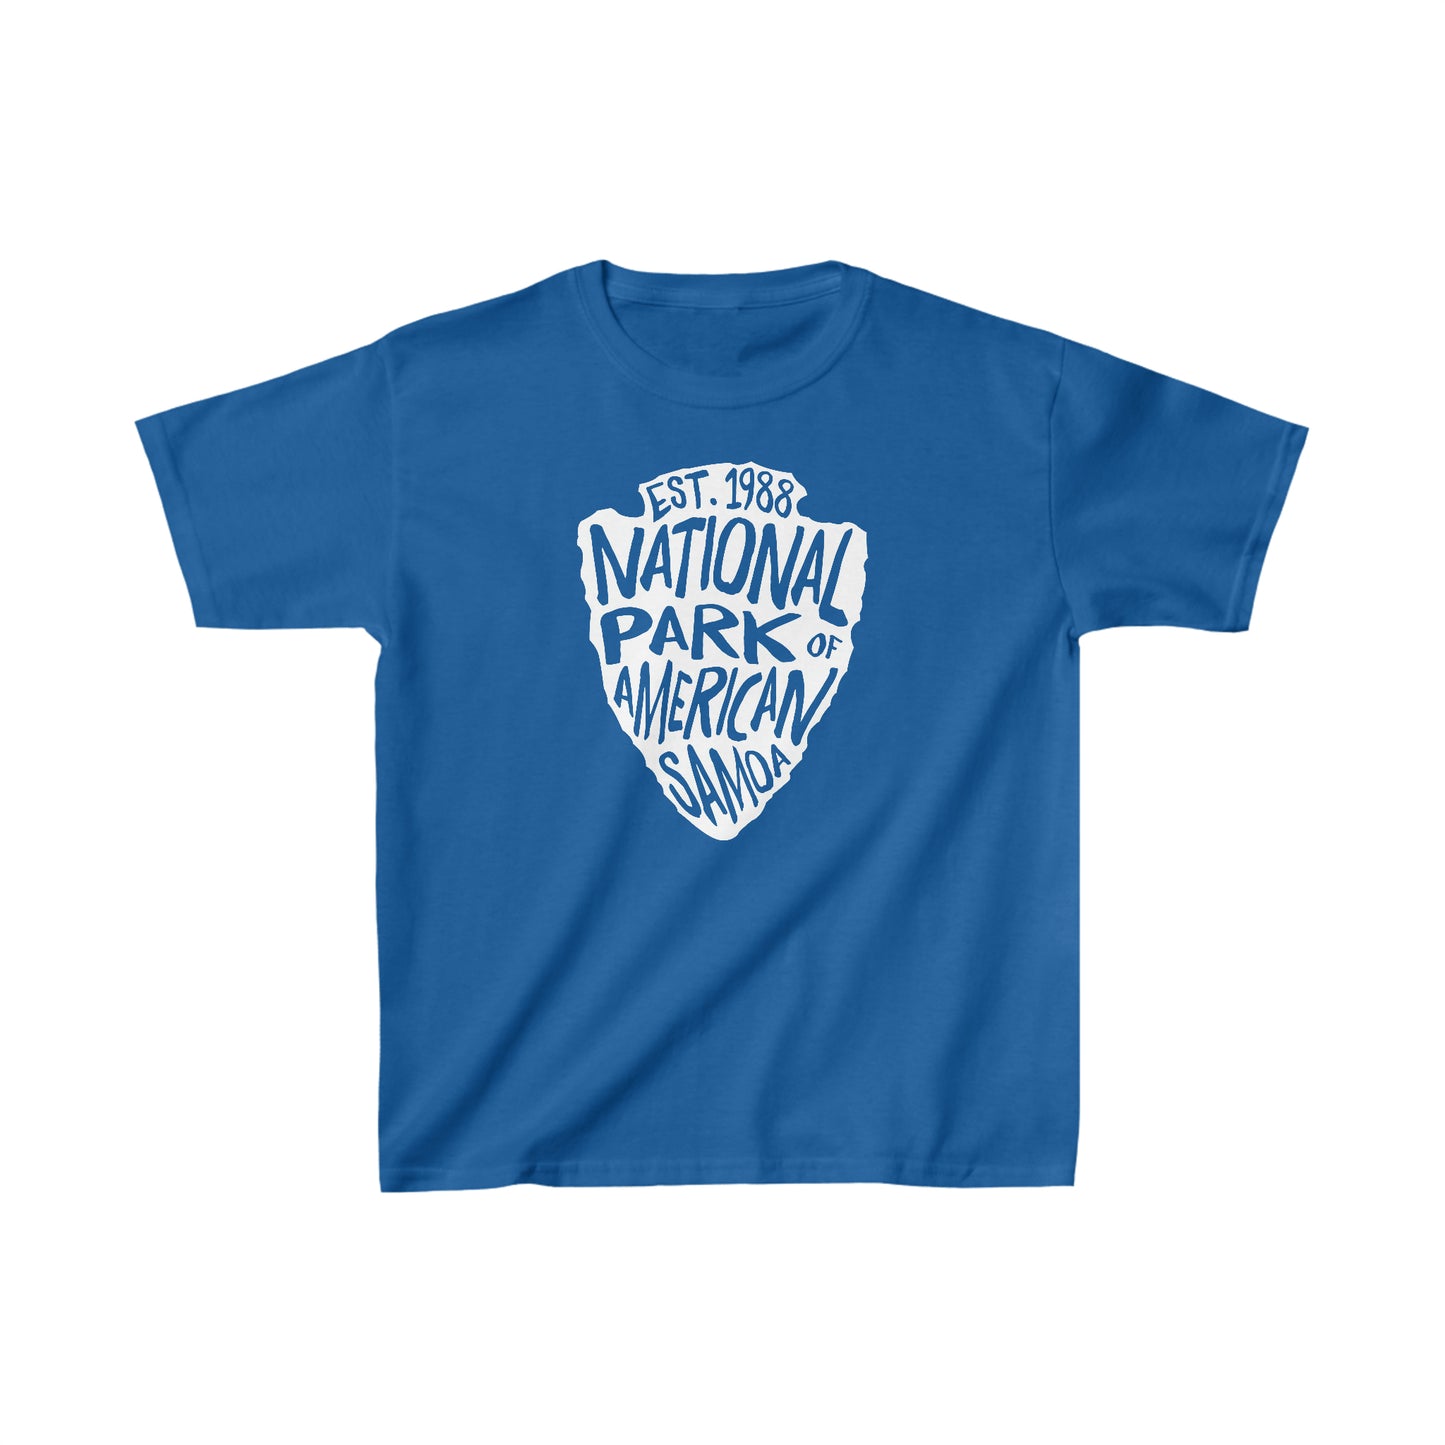 National Park of American Samoa Child T-Shirt - Arrowhead Design